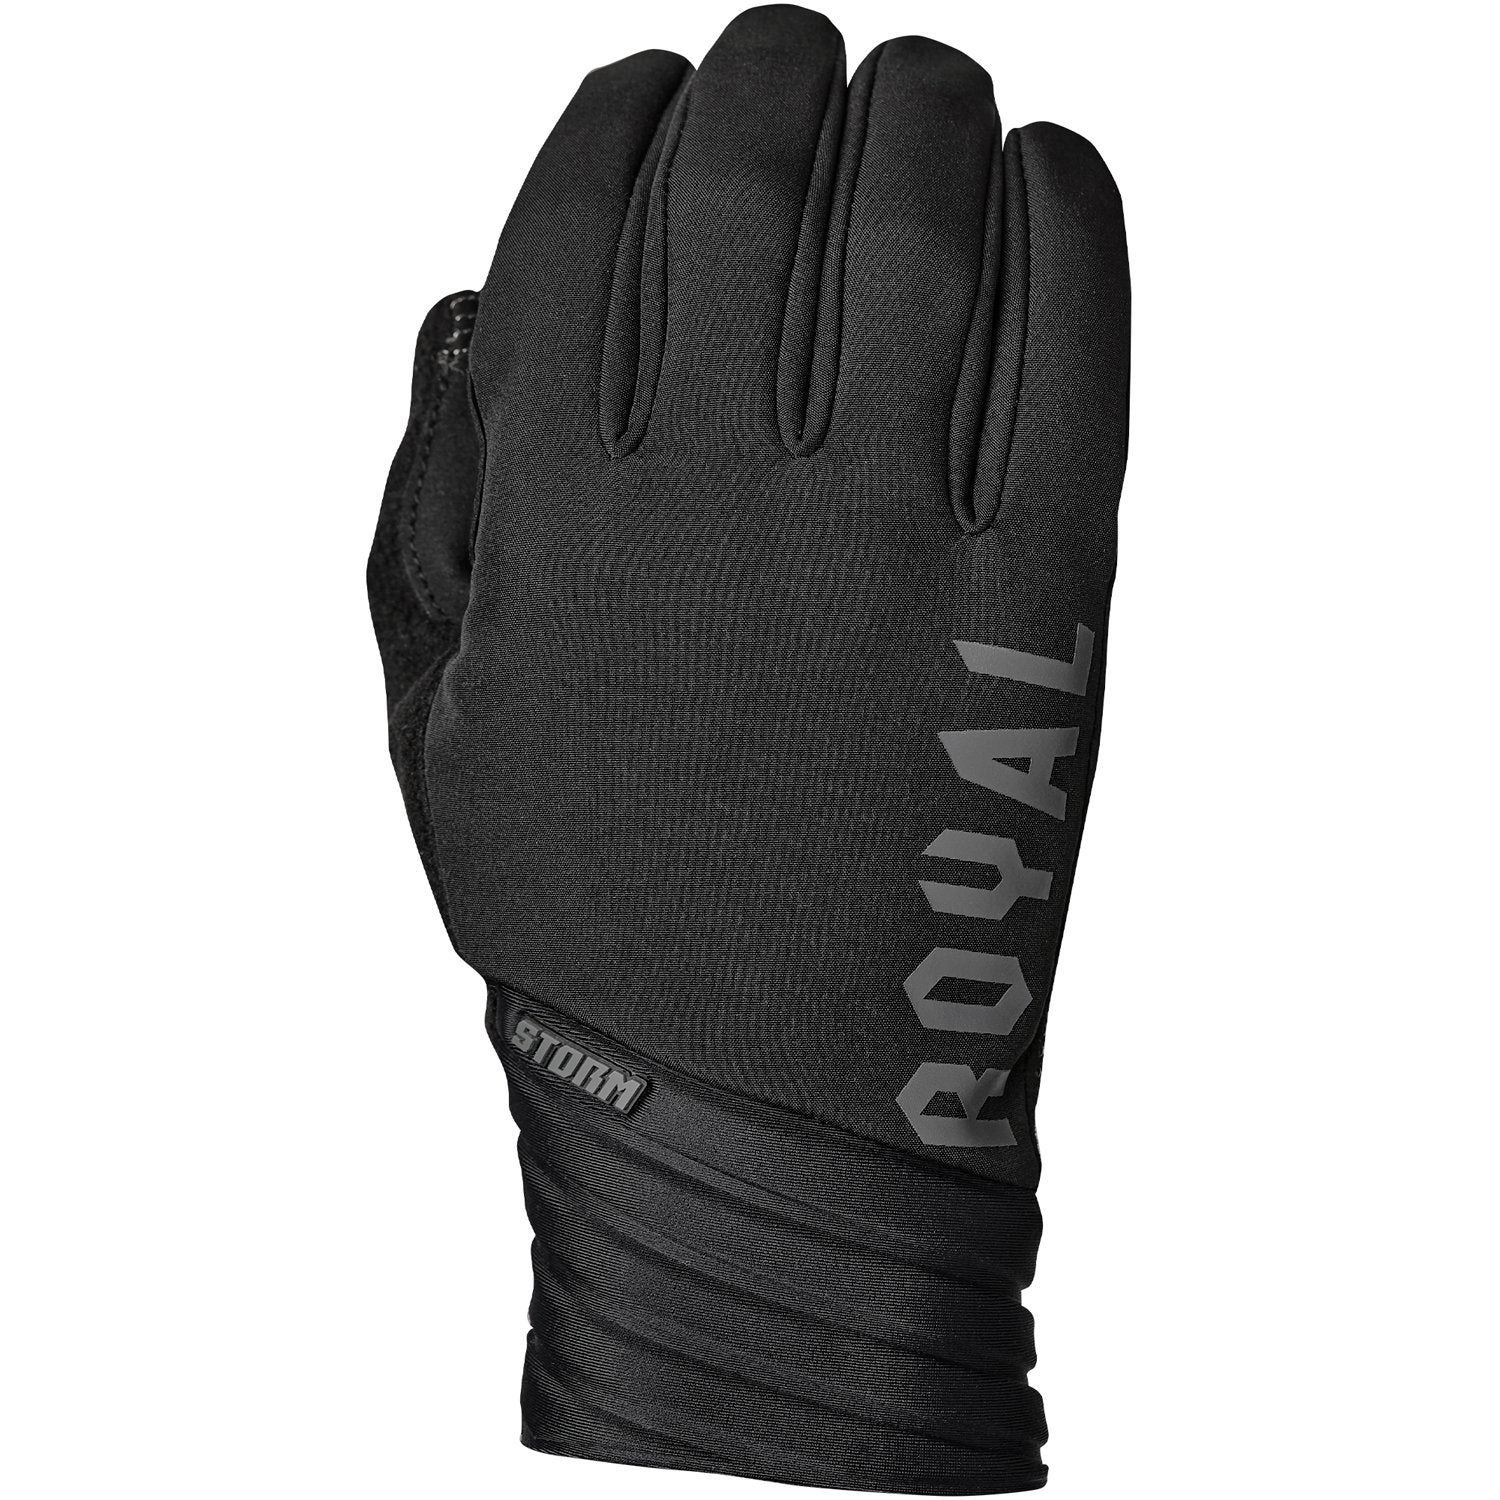 Royal Racing Storm Gloves Black